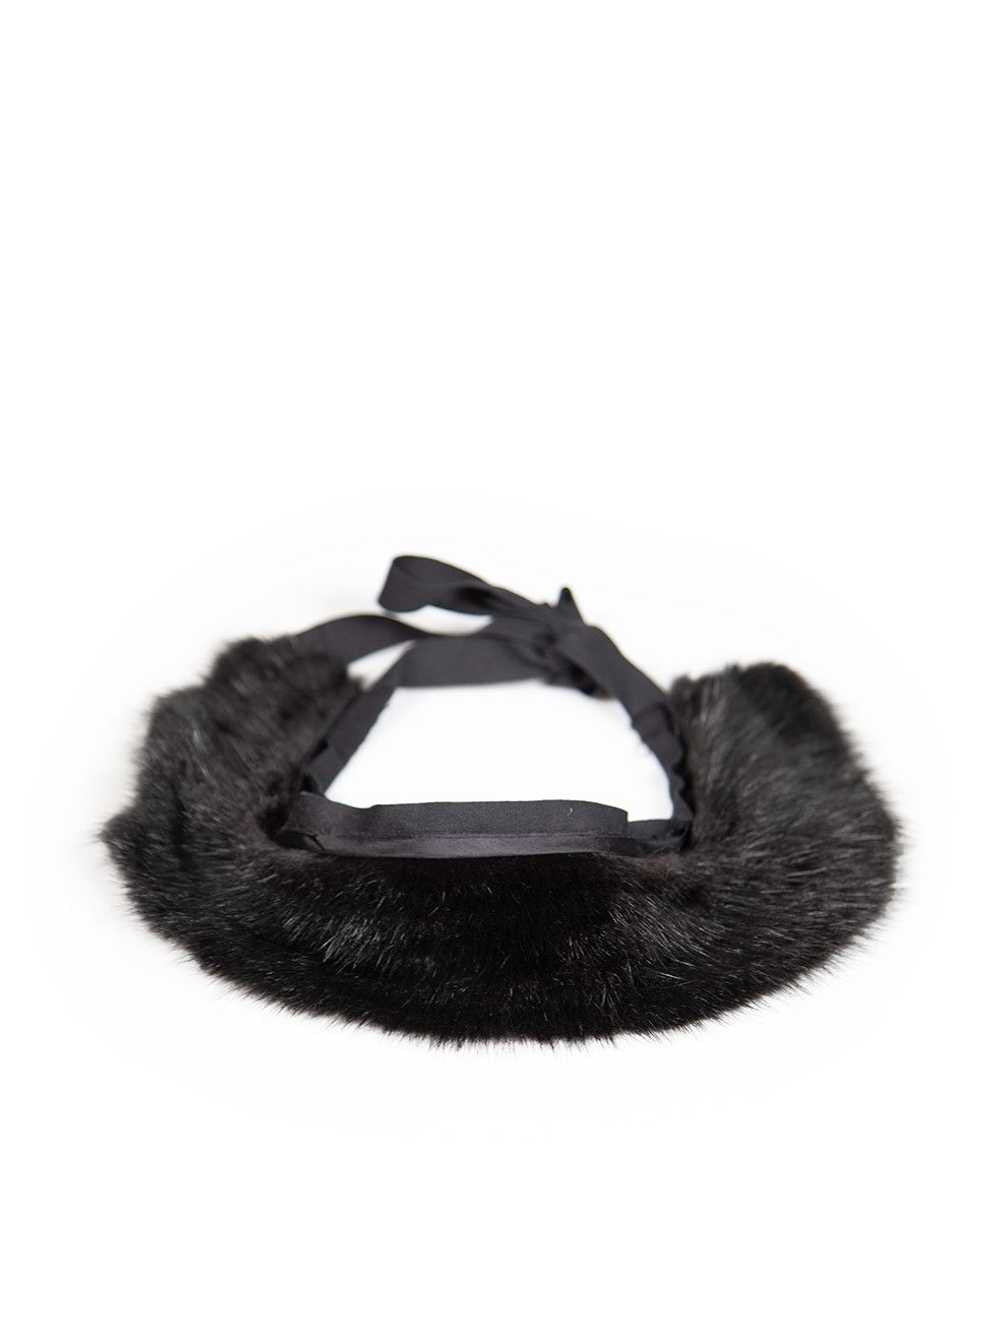 Prada Black Fur Tie Fastening Collar - image 3